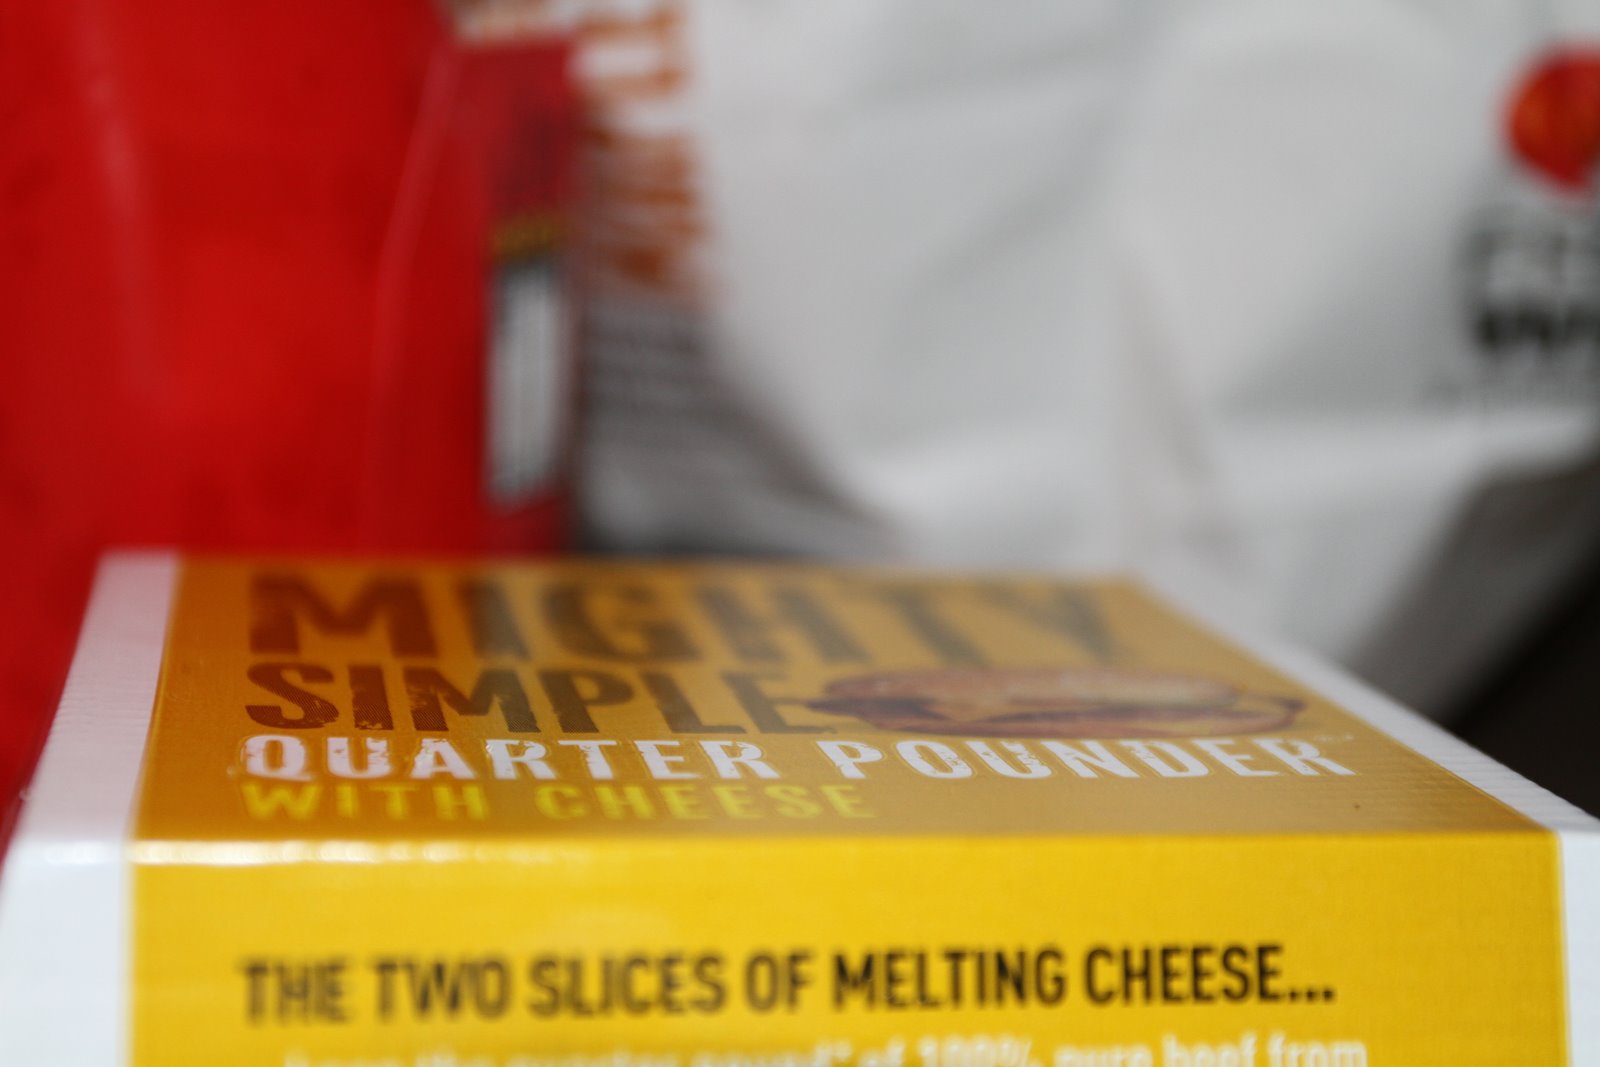 Quarter Pounder With Cheese – McDonald’s | BurgerJunkies.com